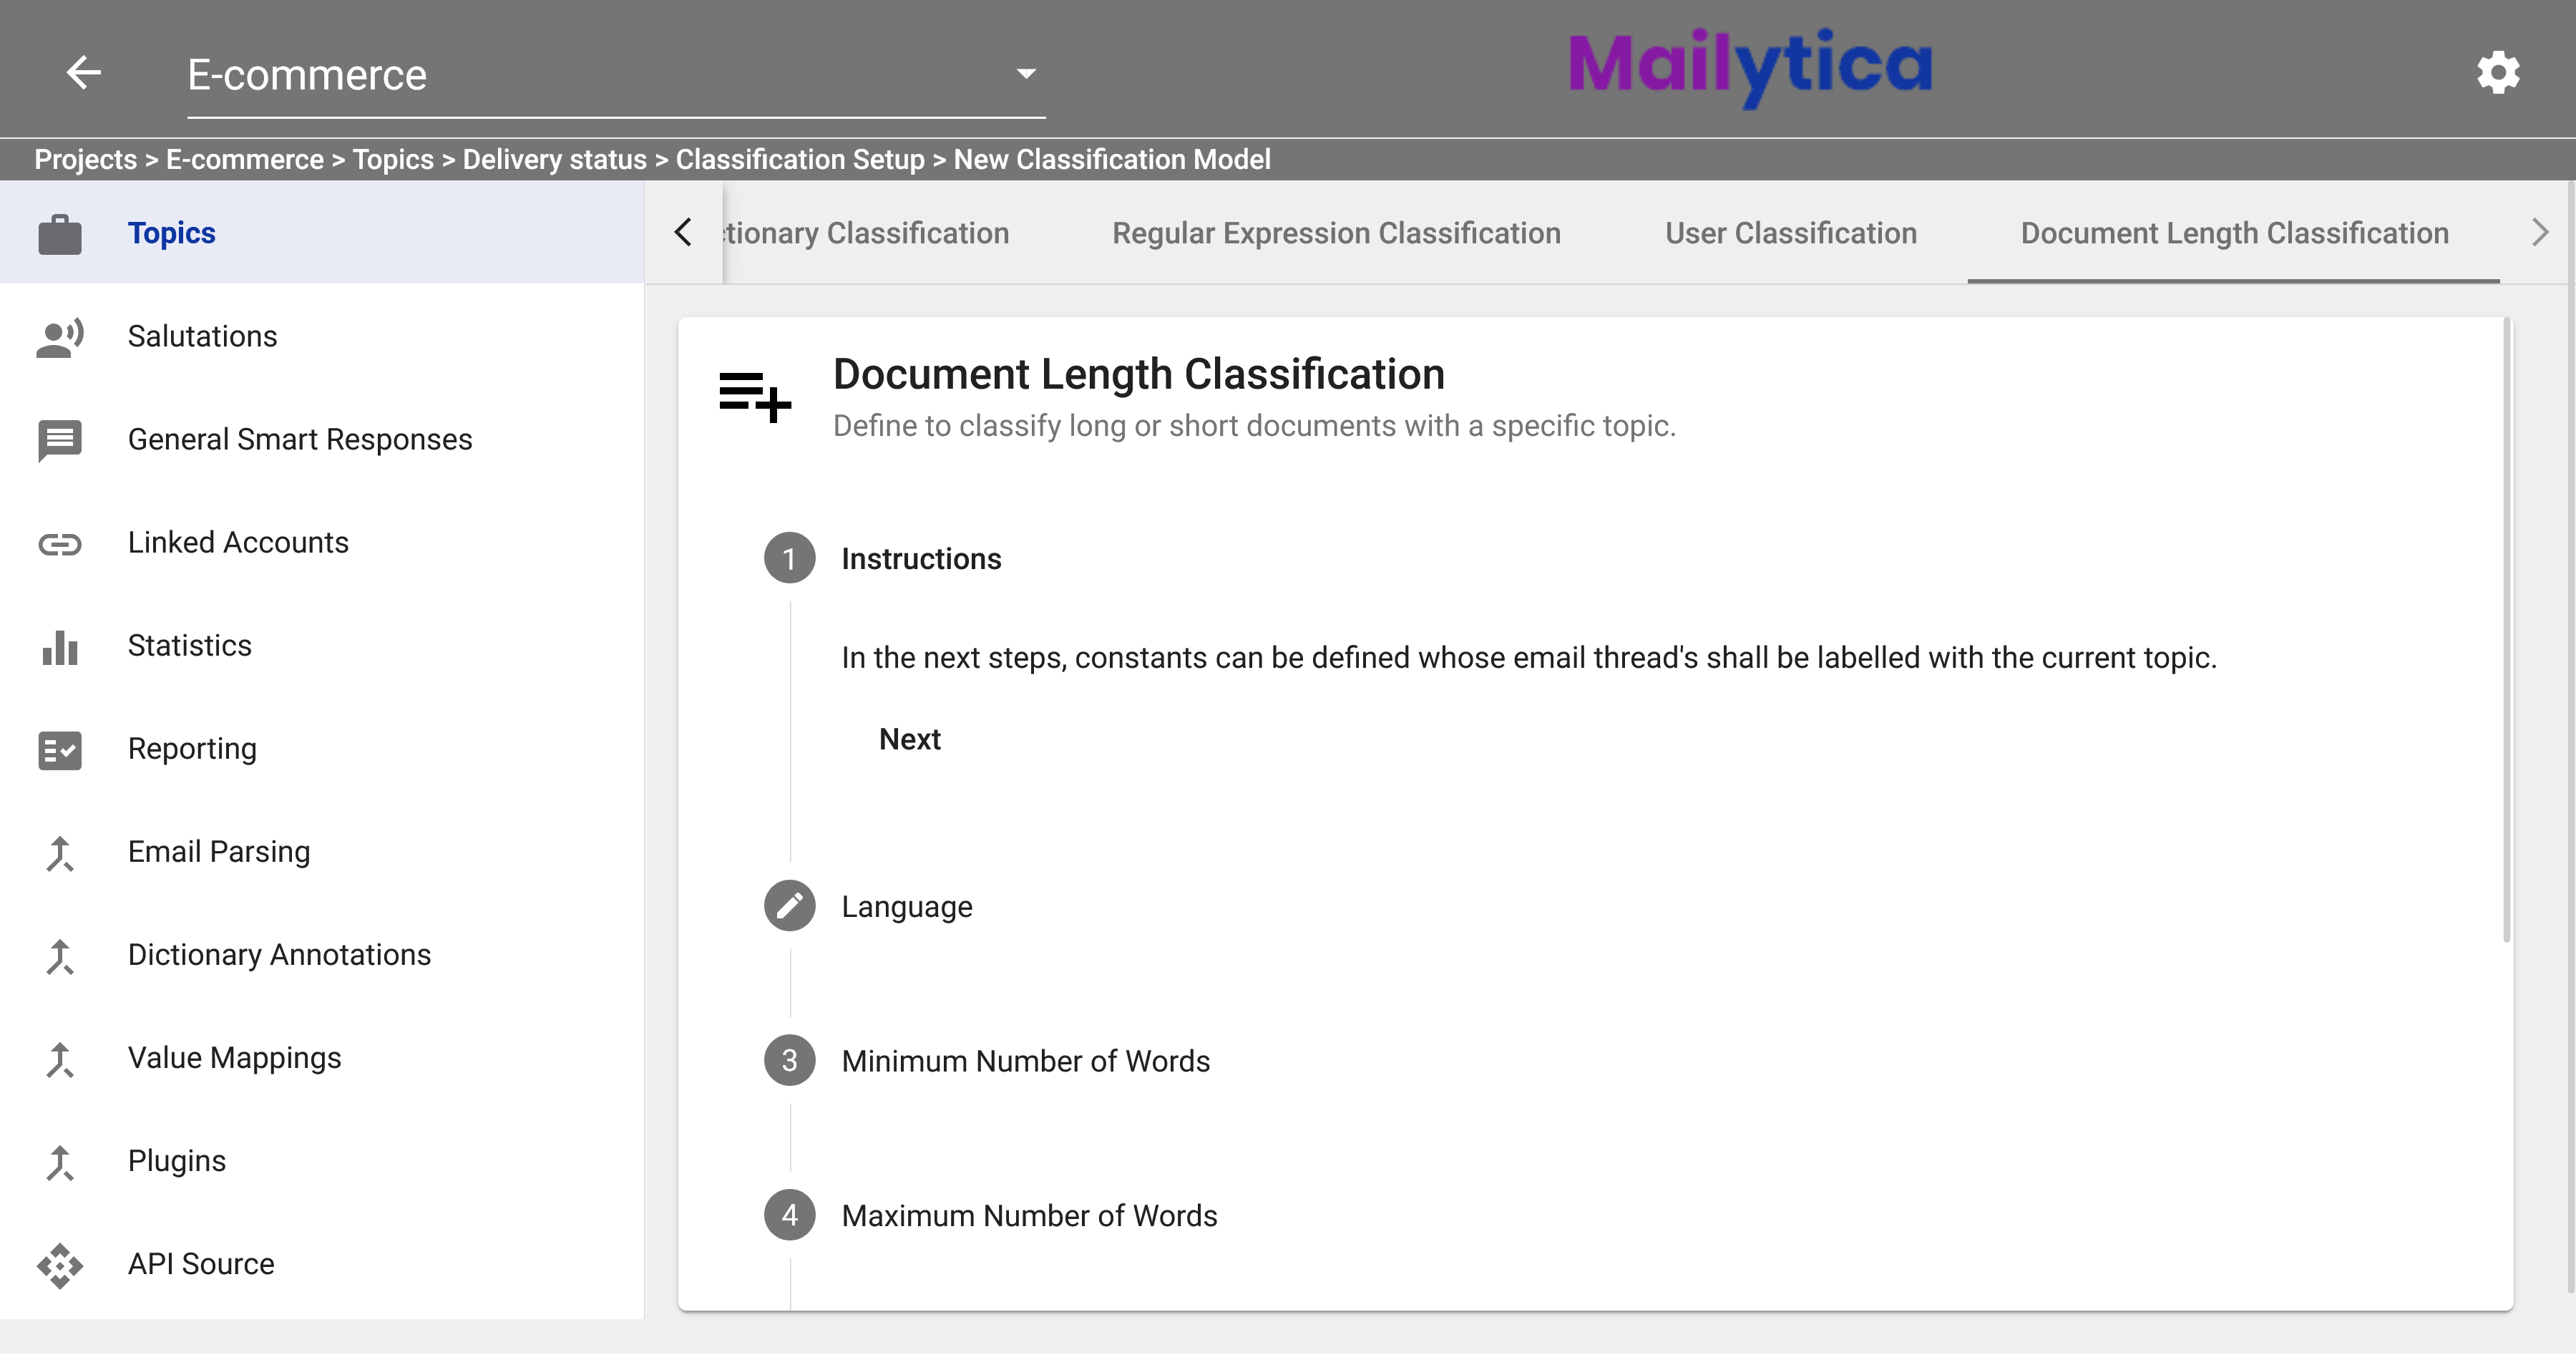 Add a new document length classification model